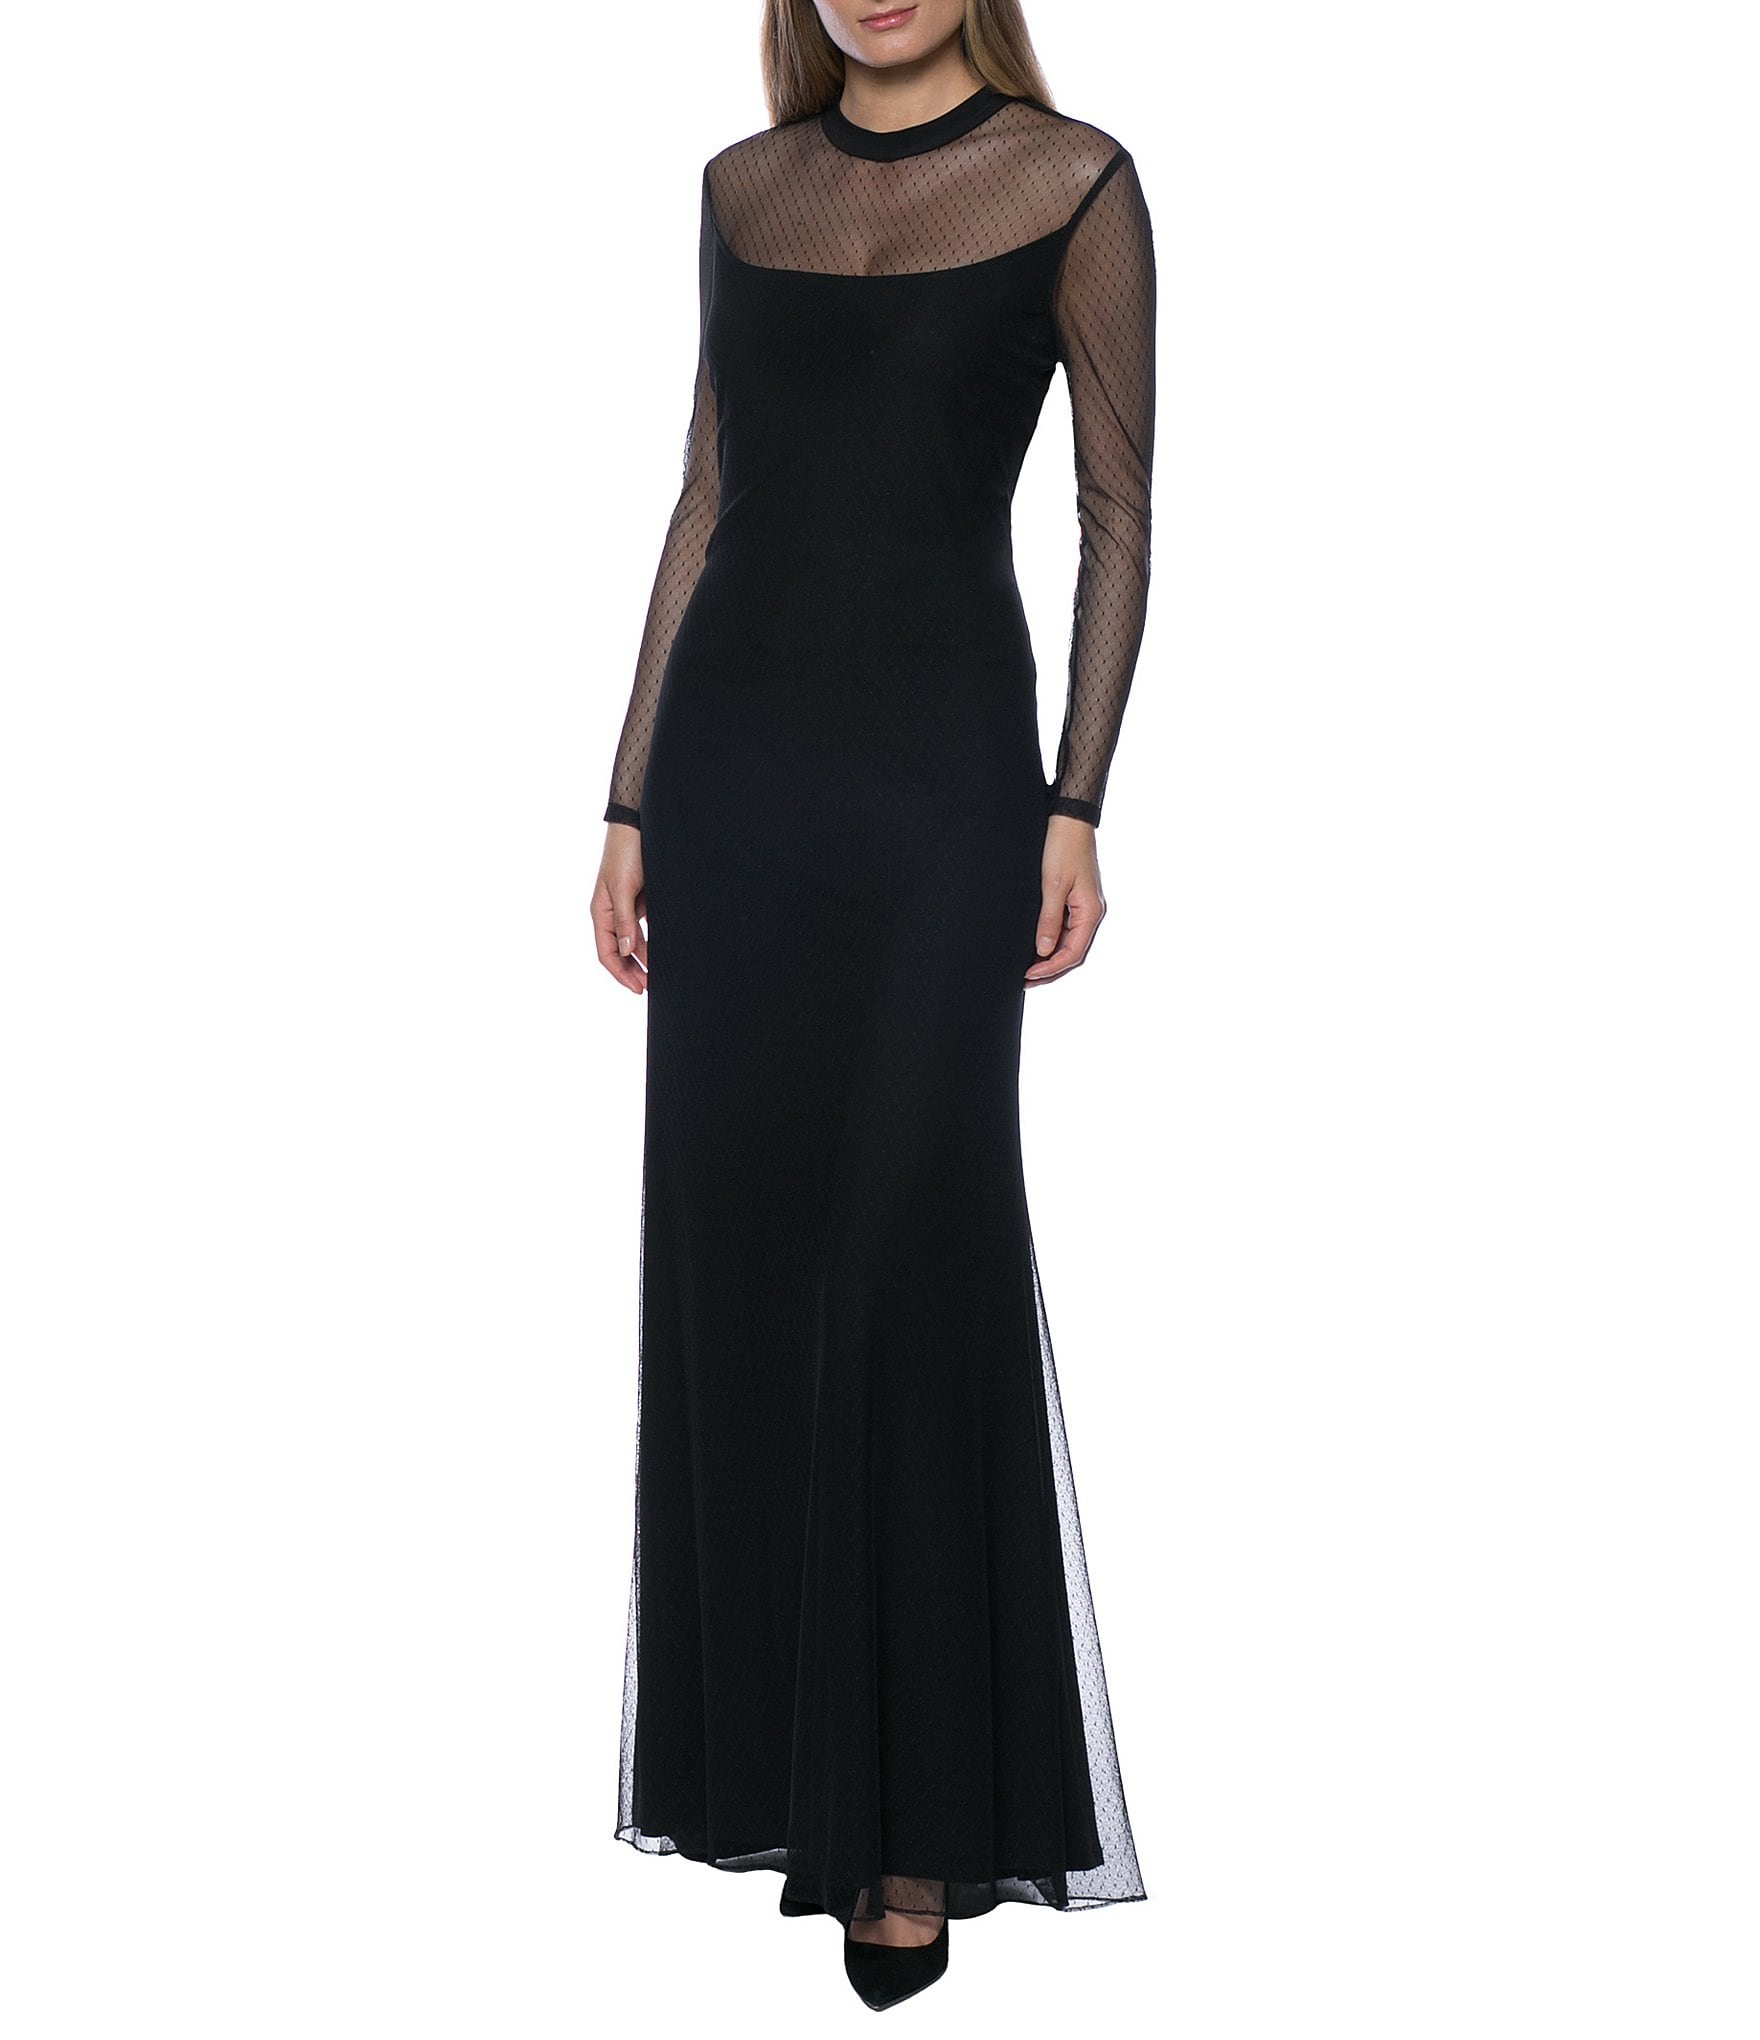 Long Sleeve Women's Formal Dresses & Evening Gowns